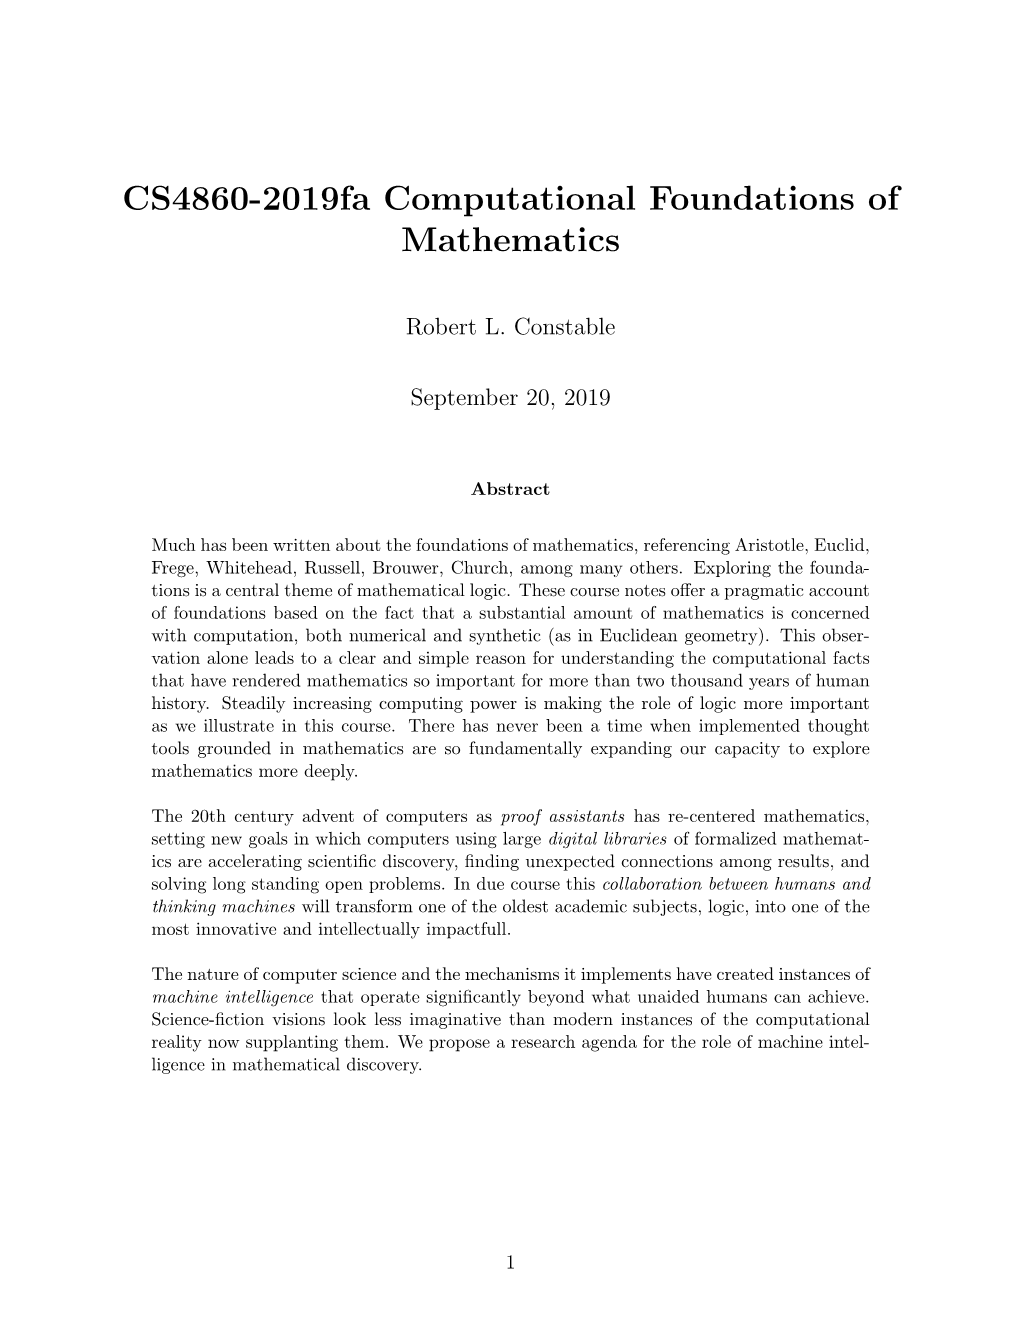 CS4860-2019Fa Computational Foundations of Mathematics